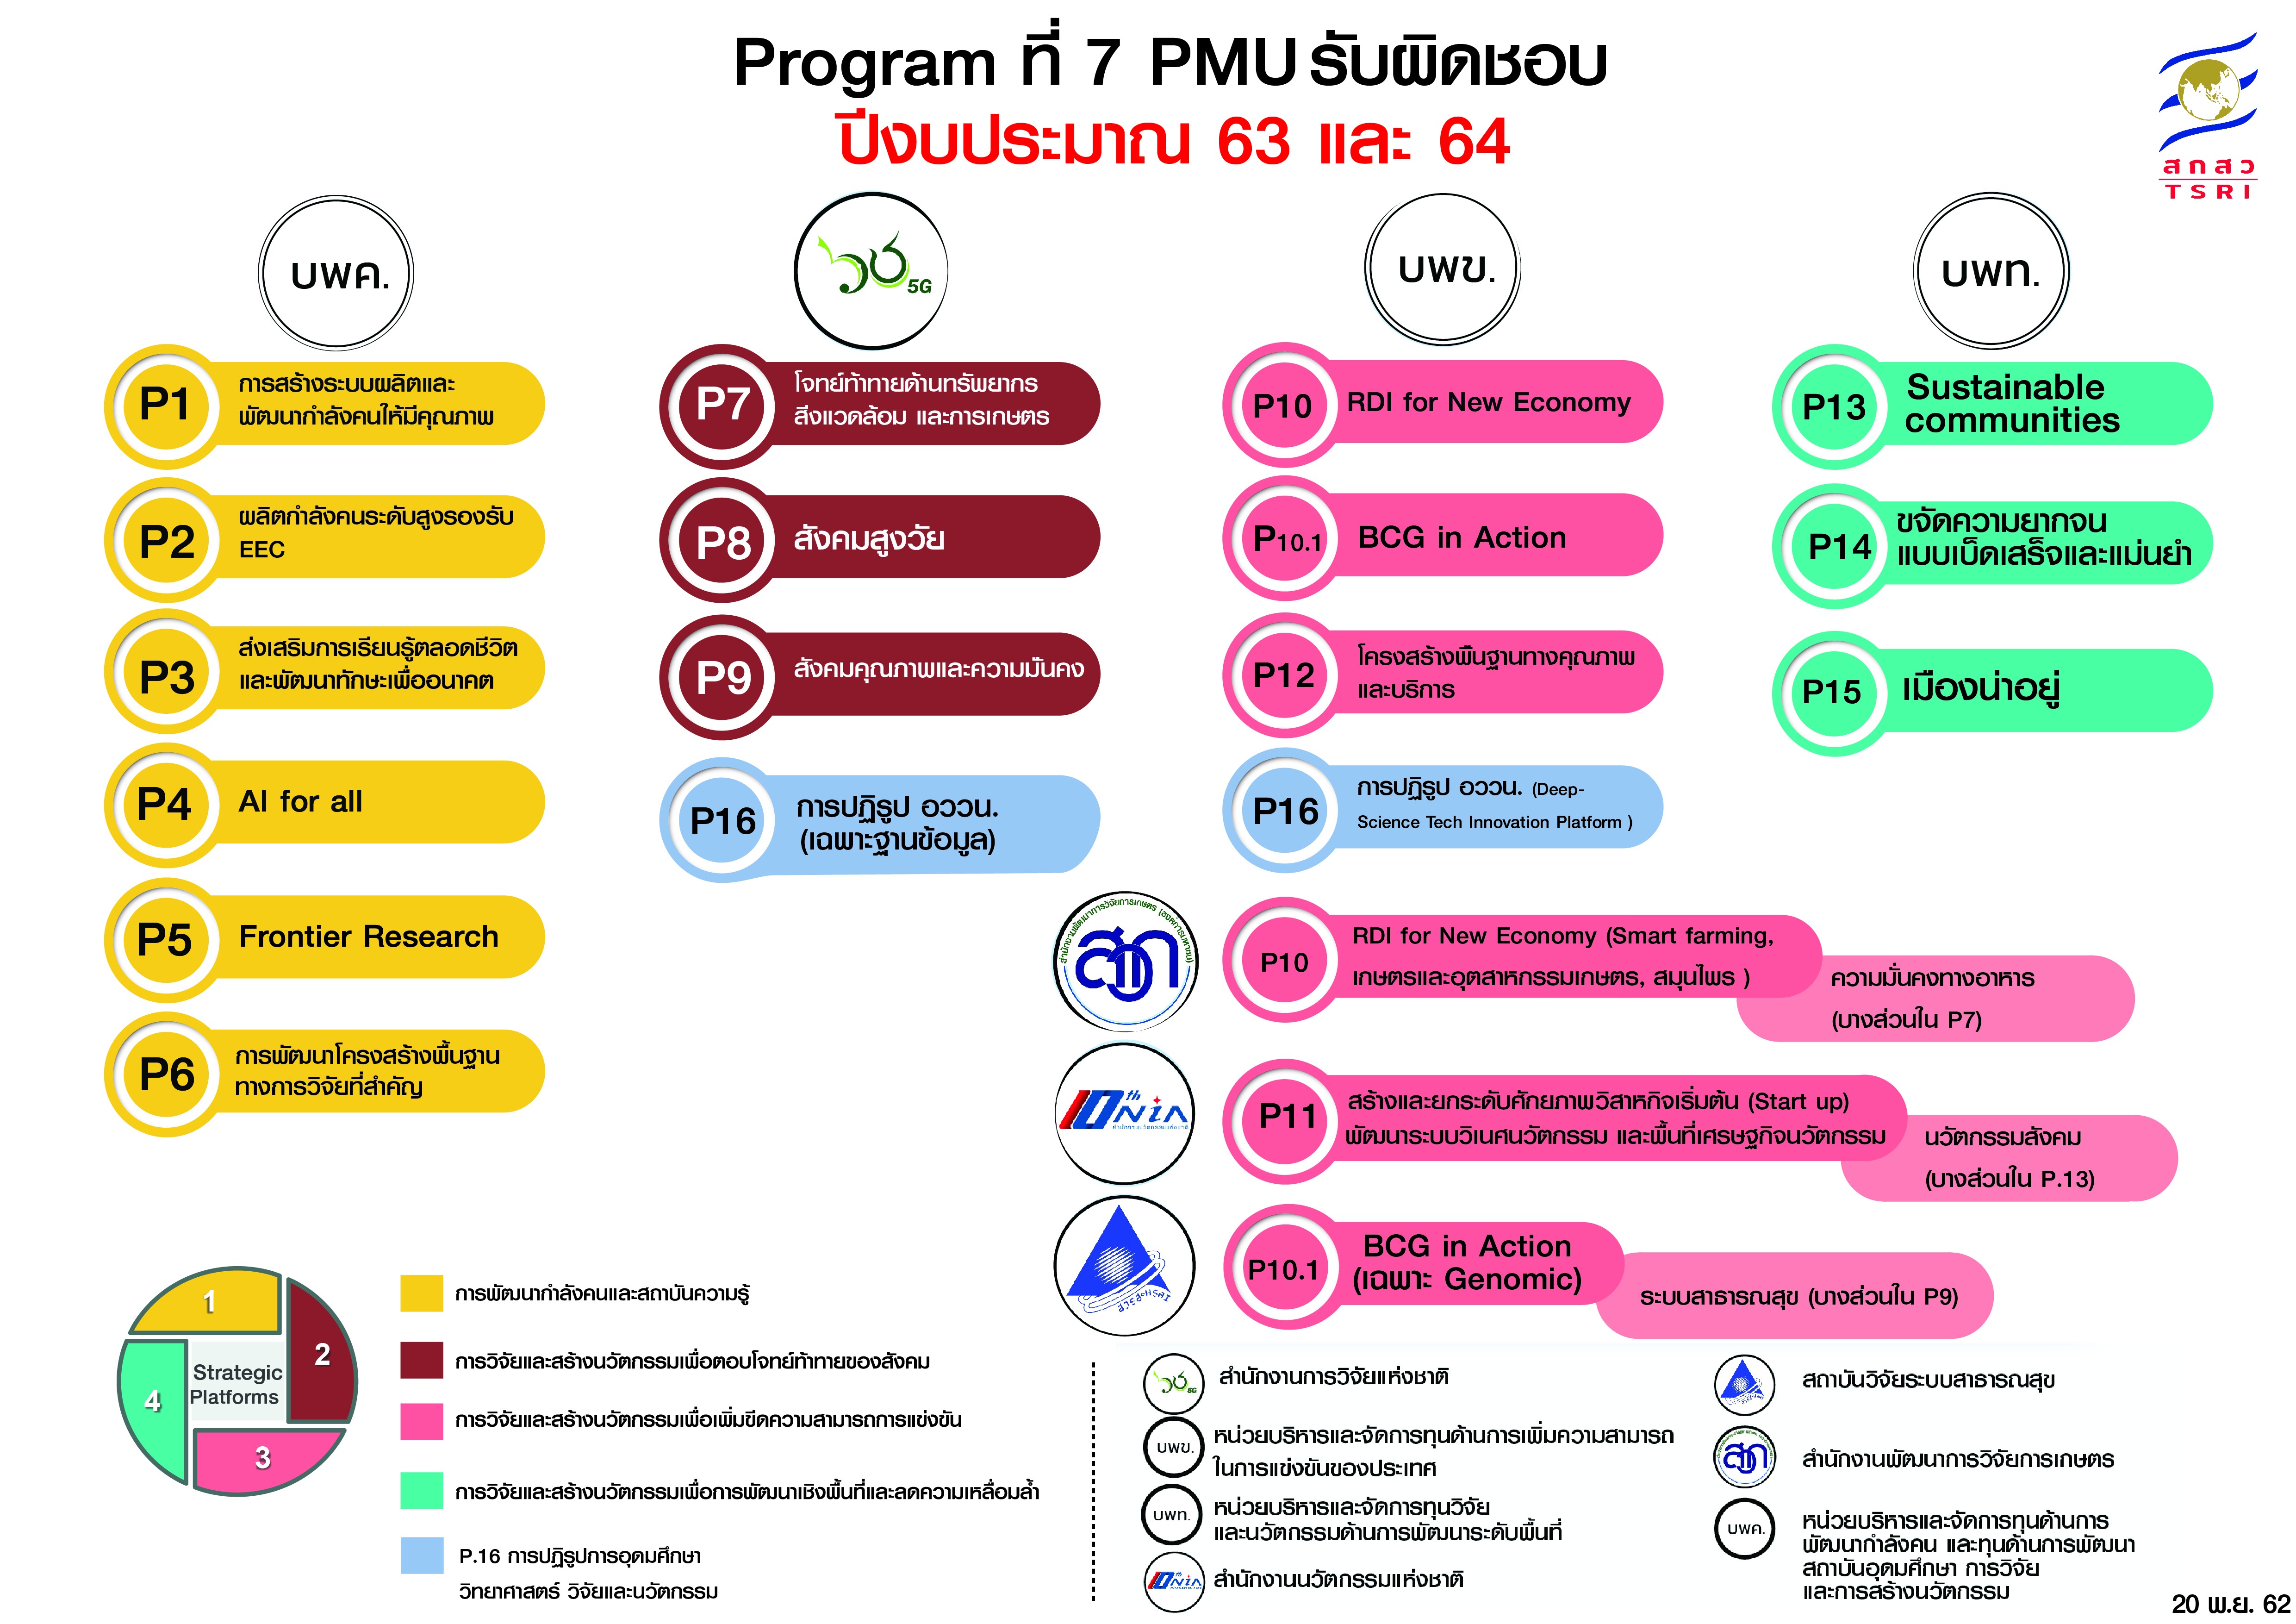 Program Management Unit : PMU